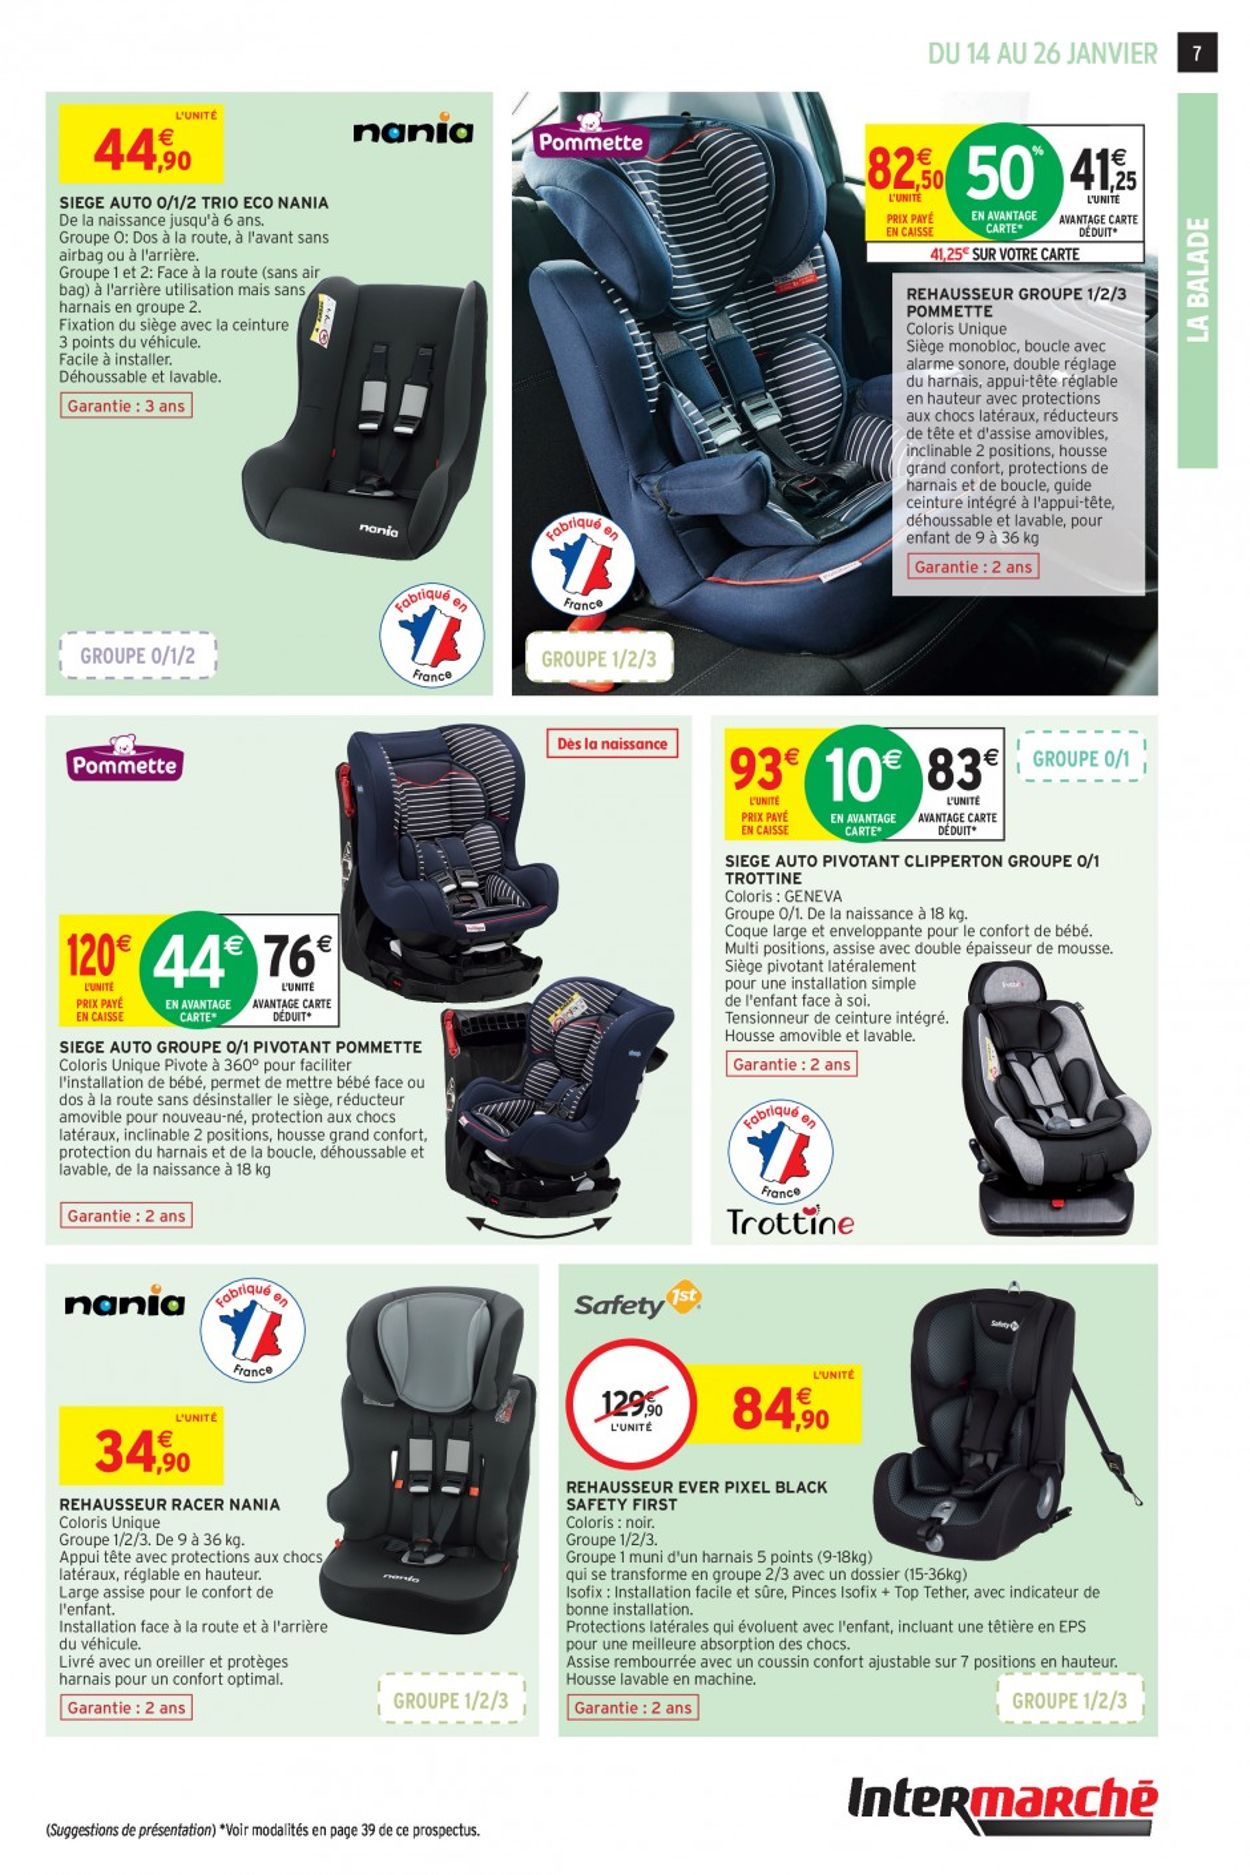 Intermarché Catalogue - 14.01-26.01.2020 (Page 7)